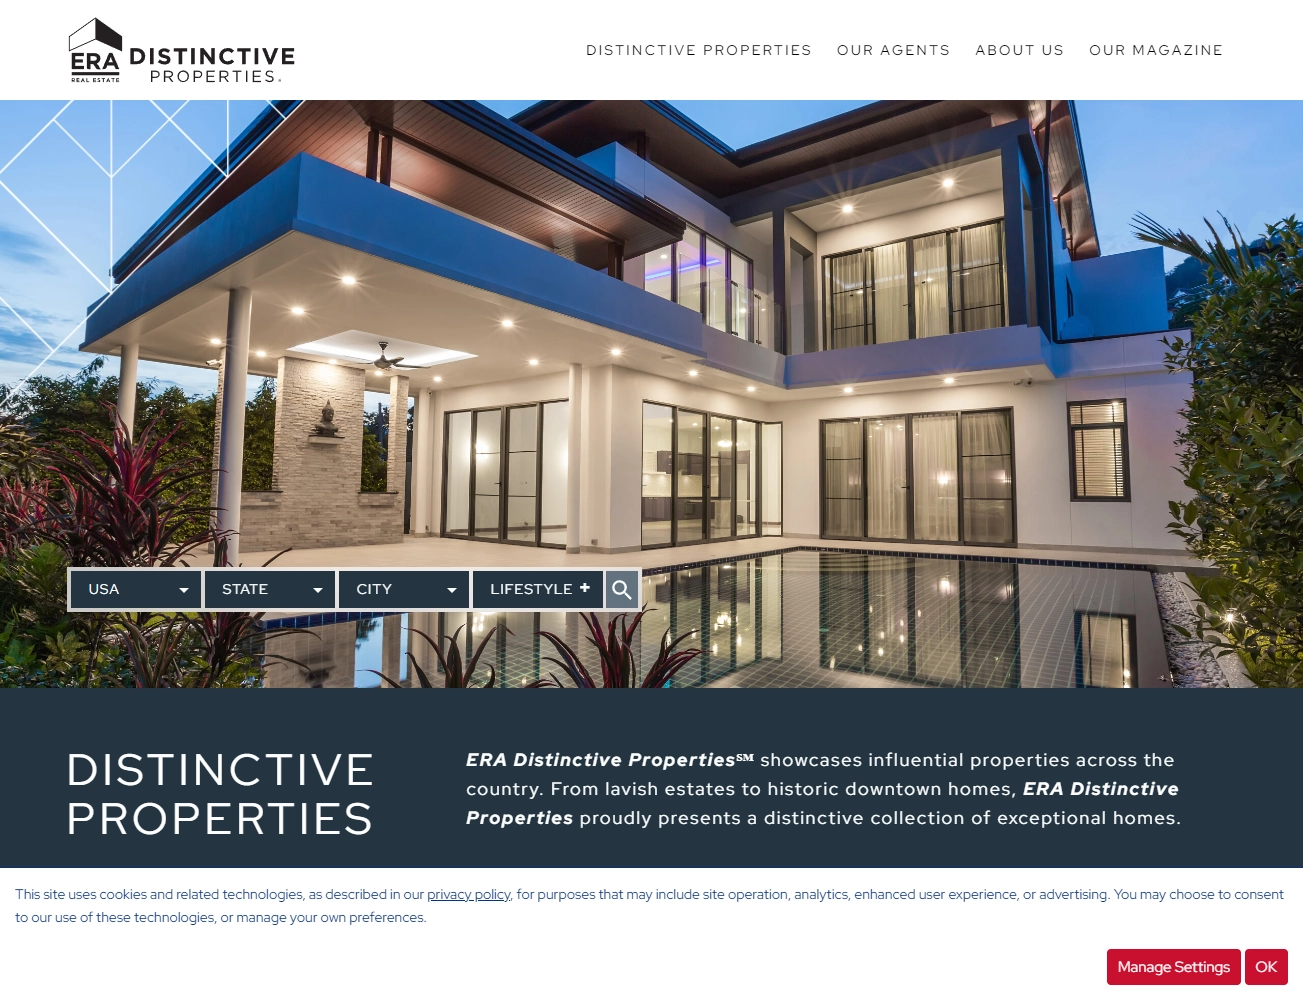 The ERA Distinctive Properties website homepage